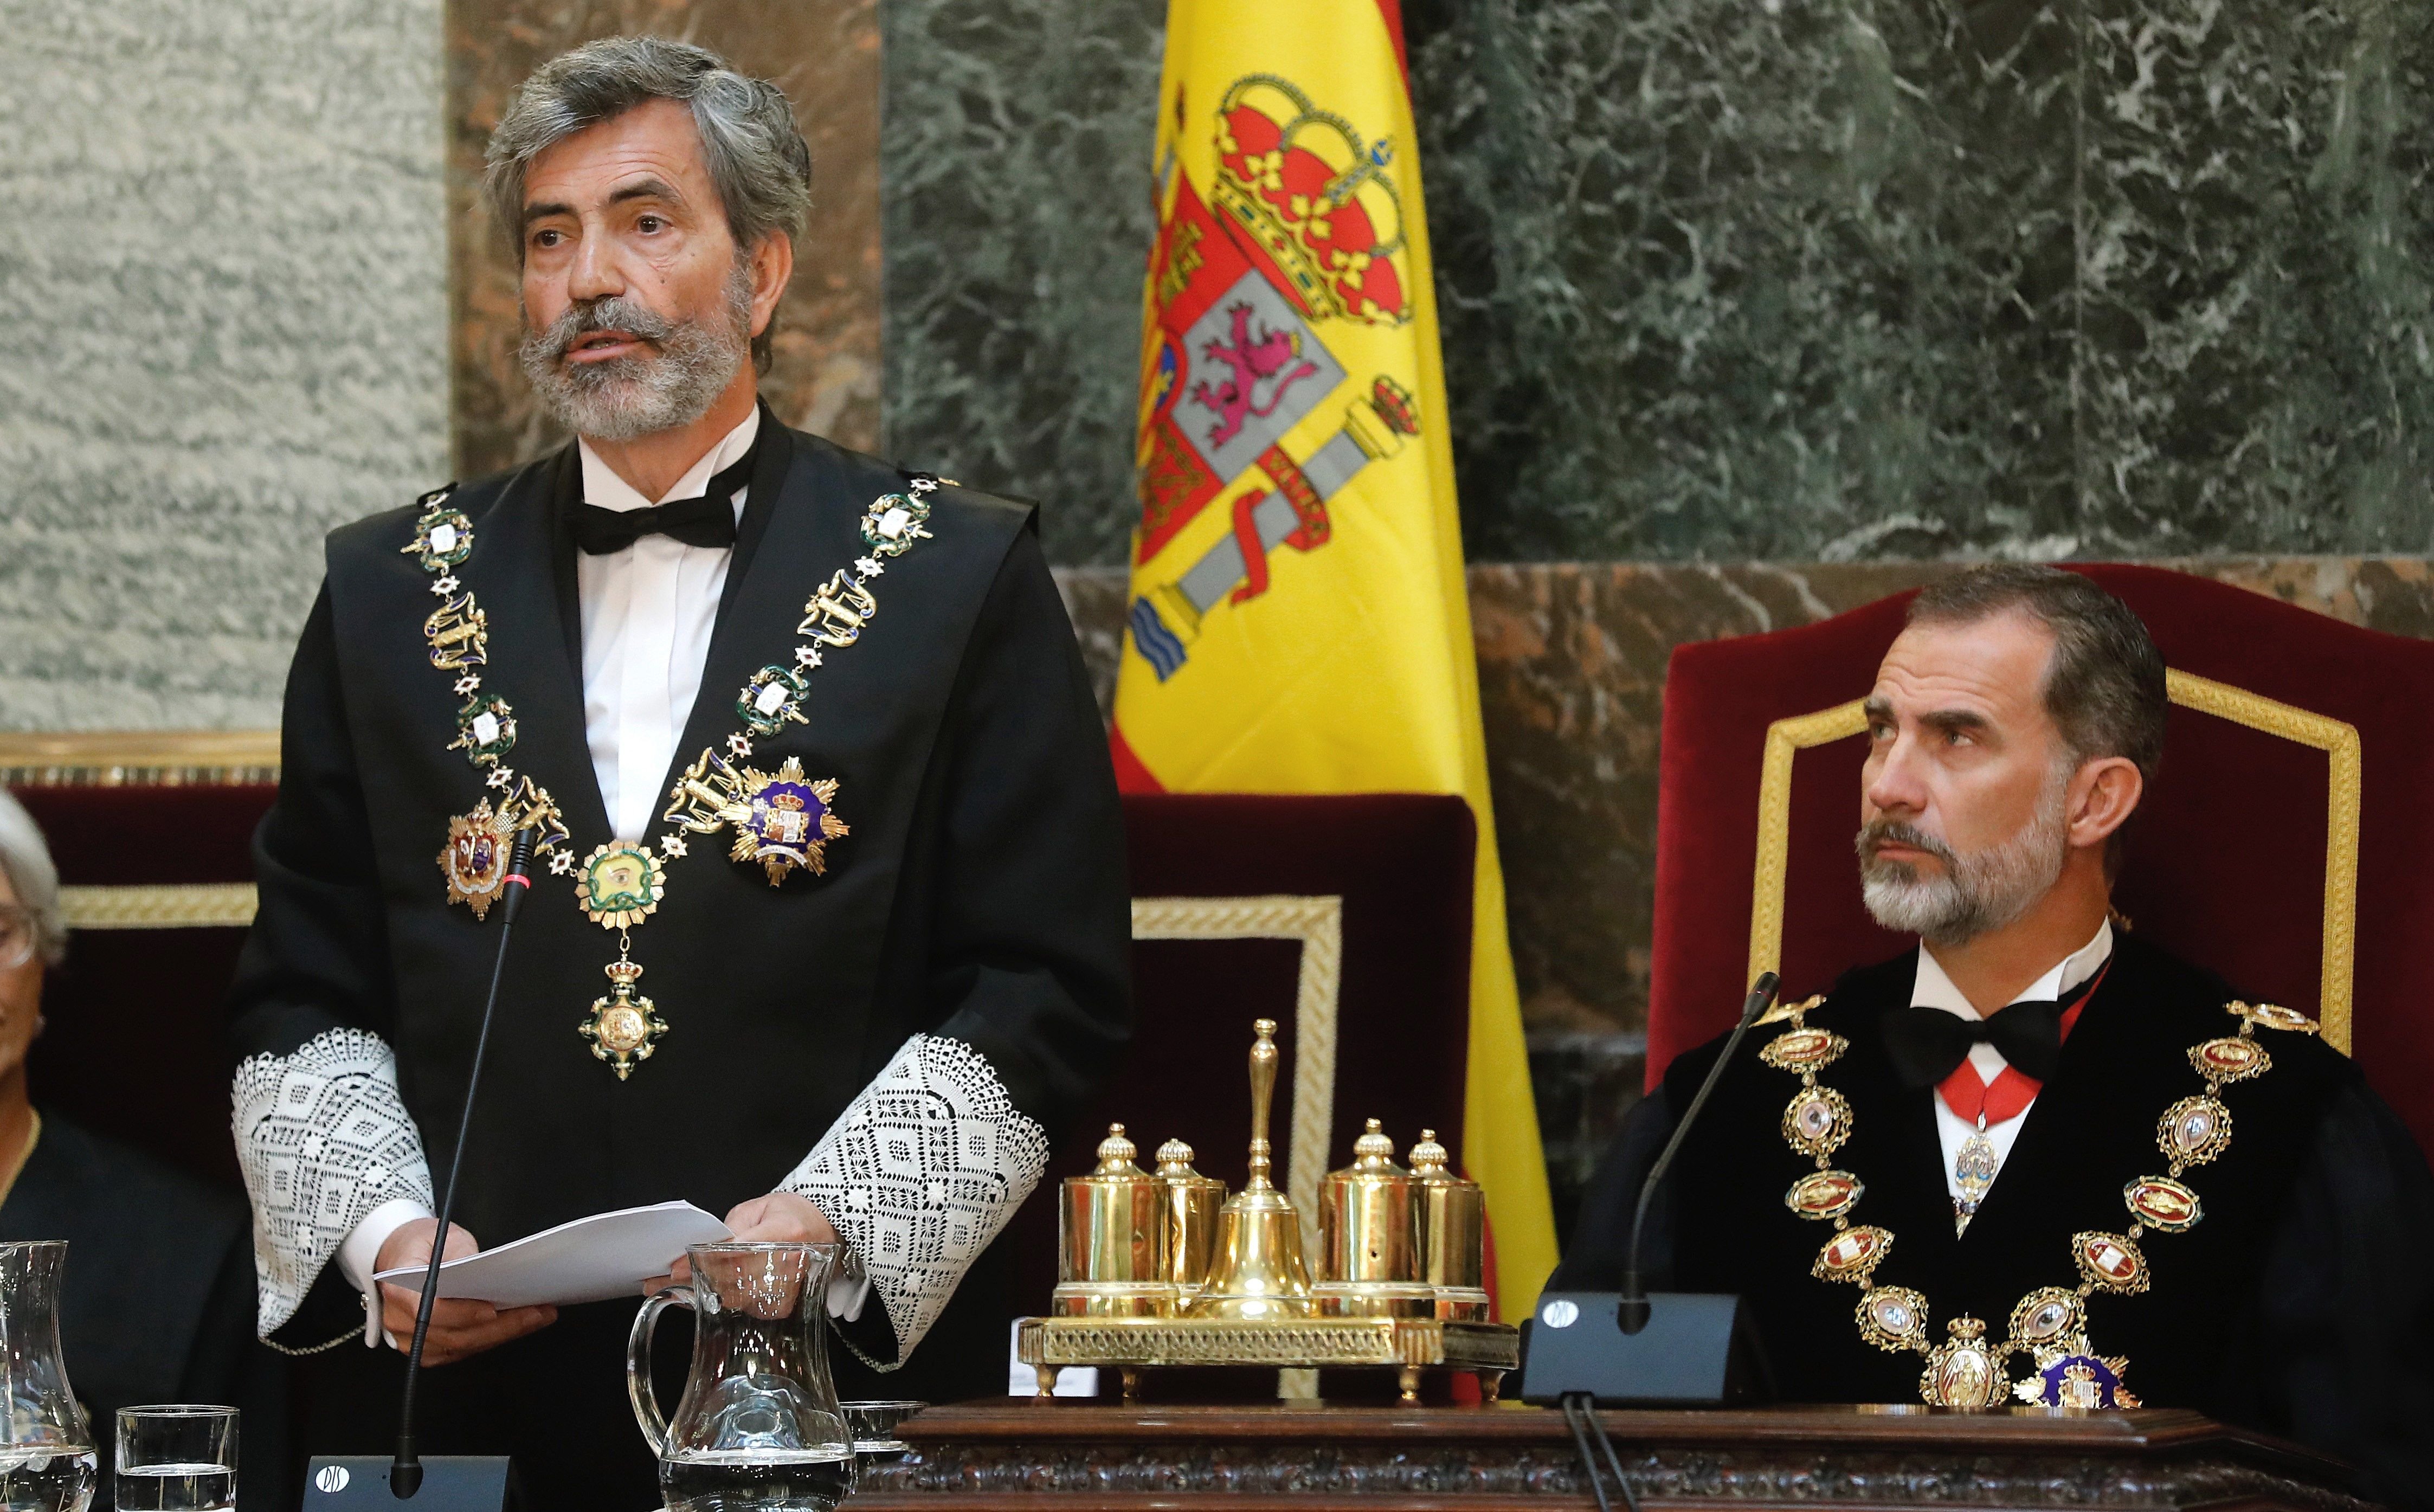 Senior Spanish judge accuses European courts of creating "uncertainty"